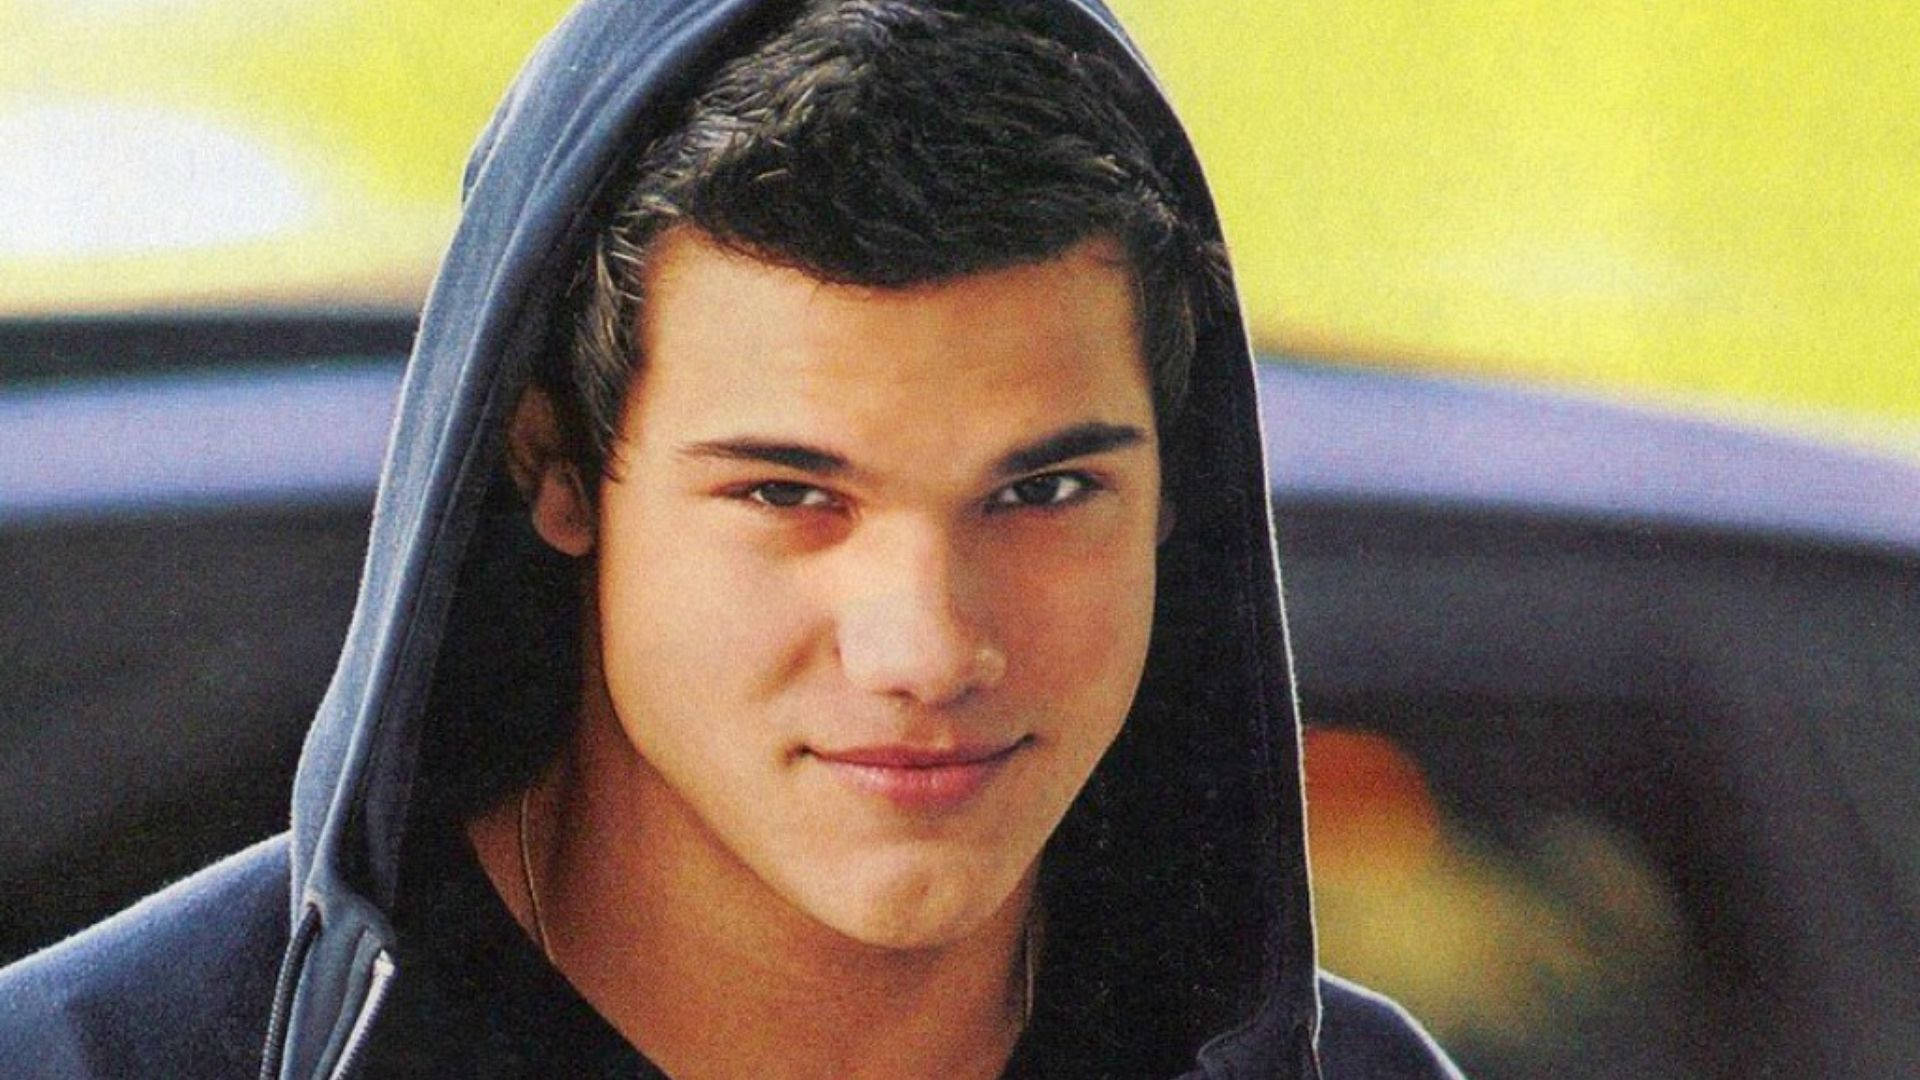 Taylor Lautner Smiling Cutely Wallpaper